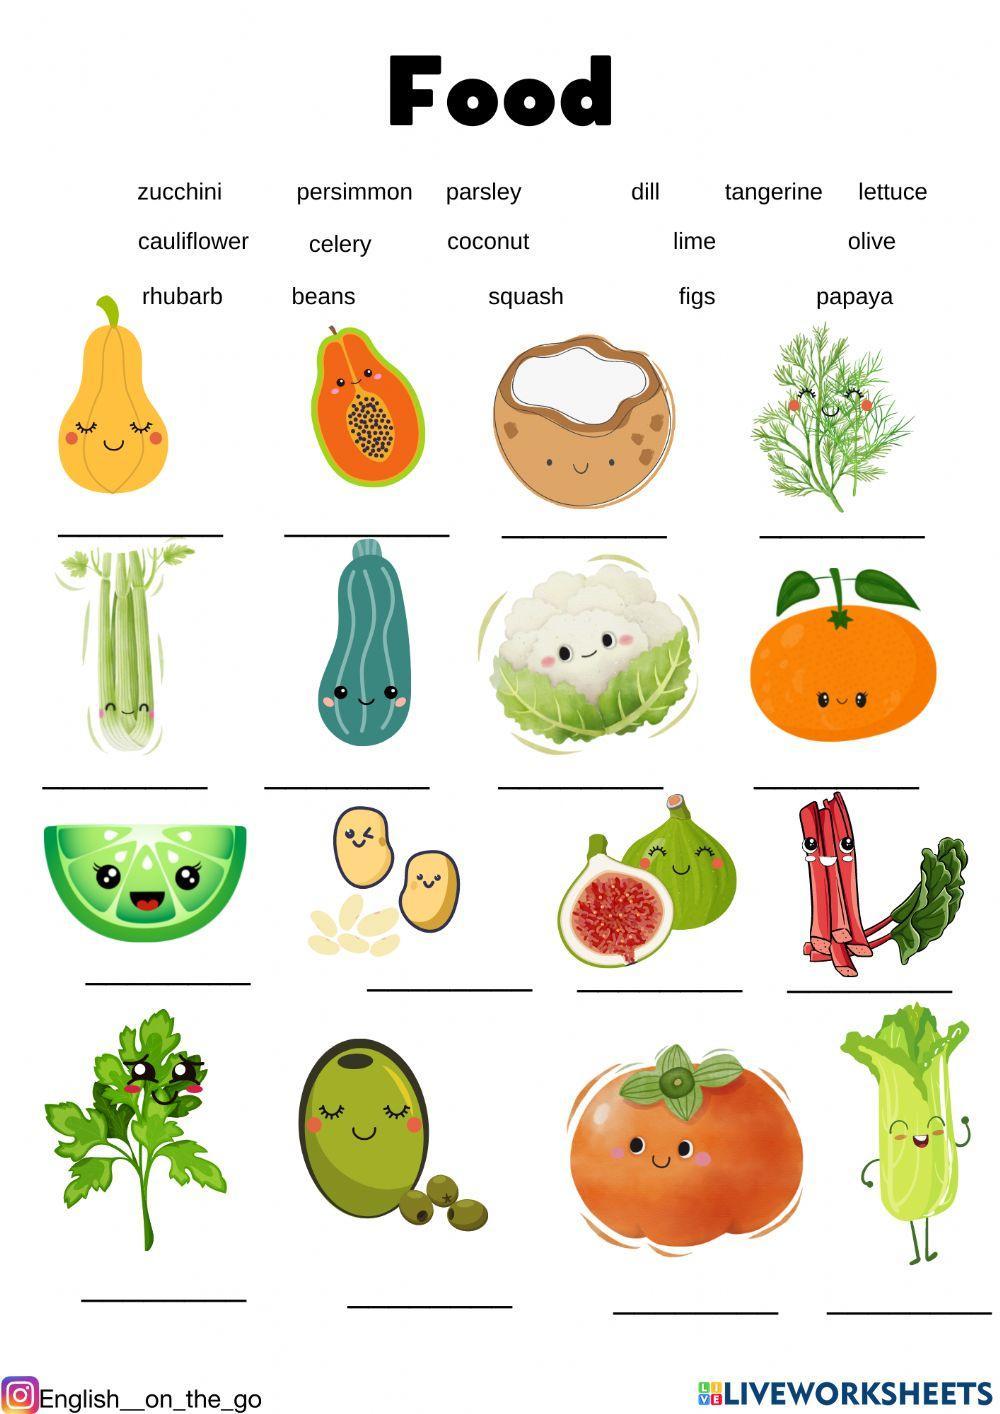 Fruit and veggies